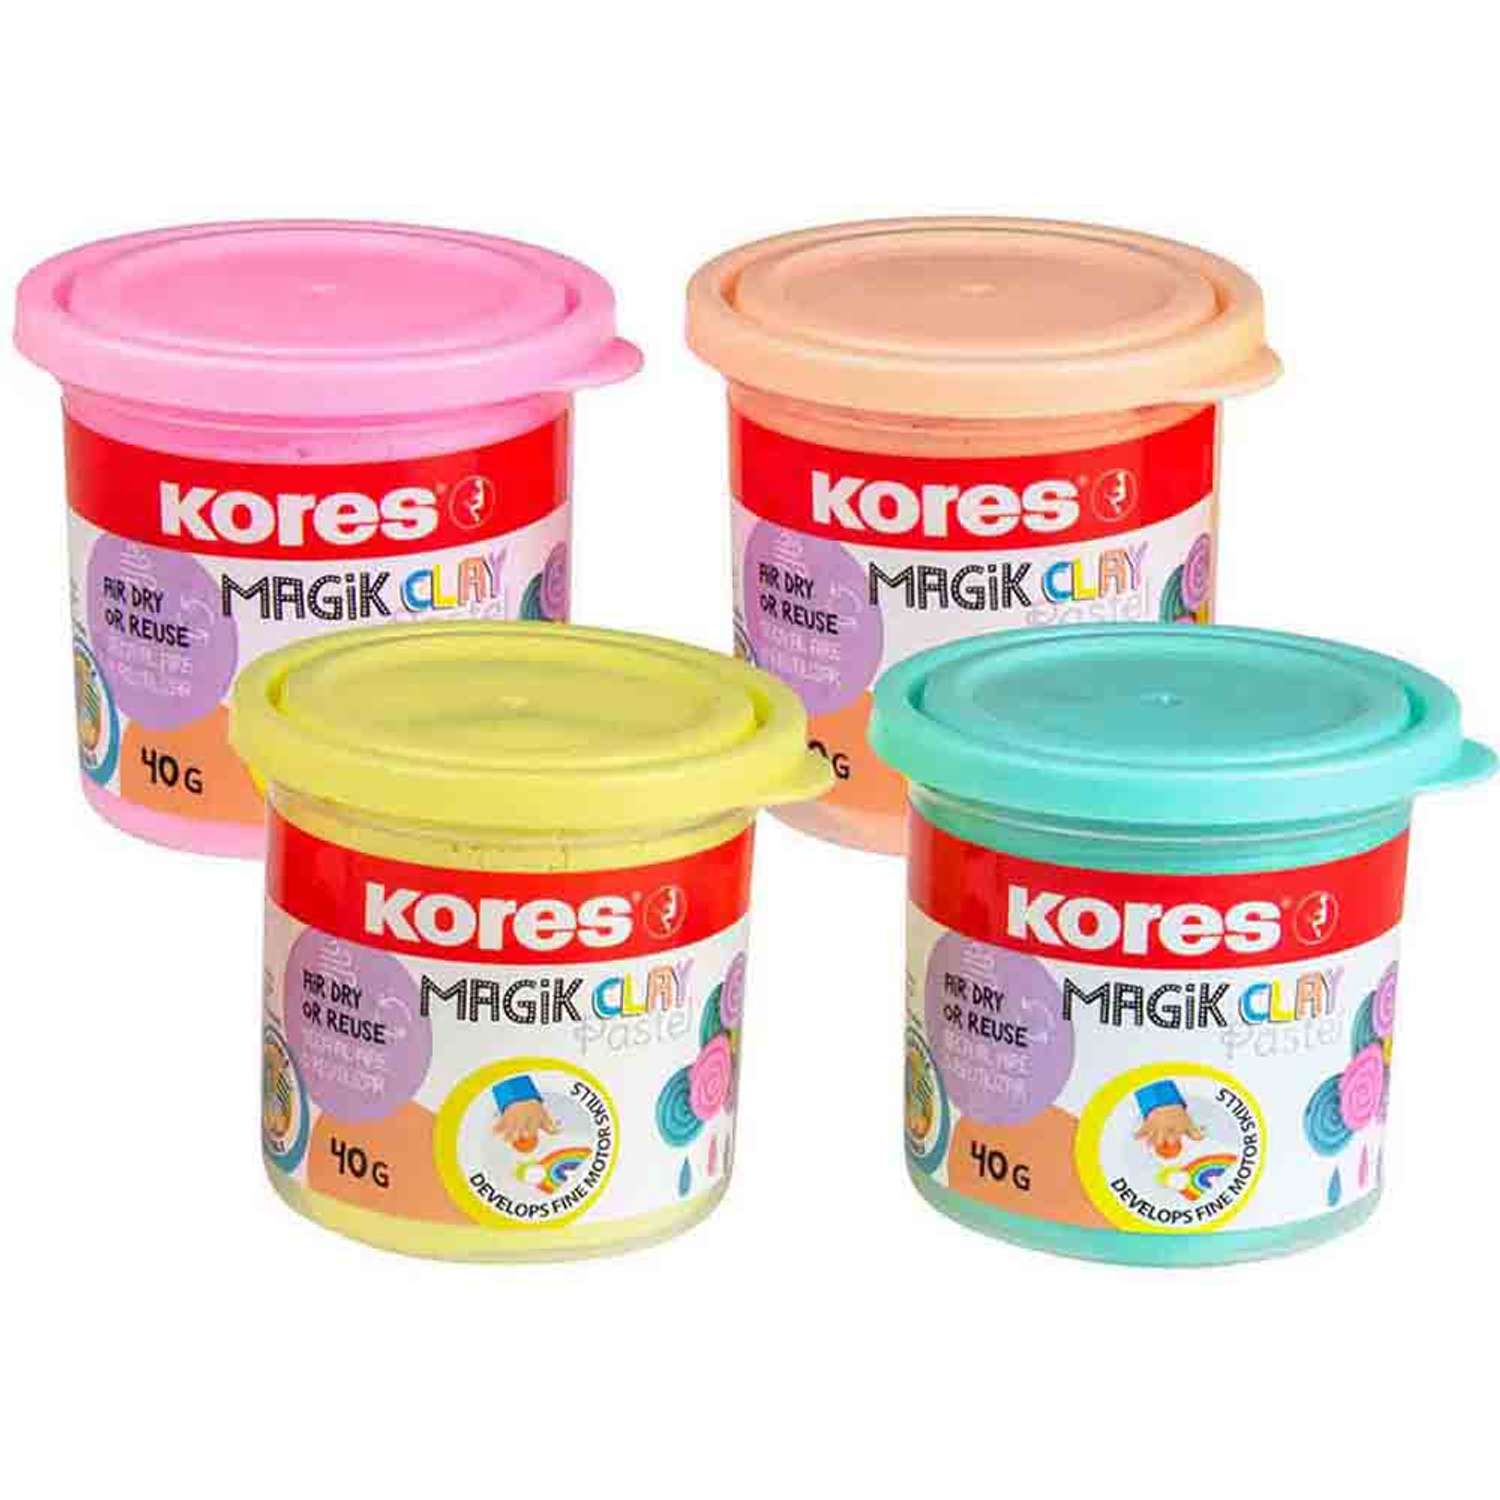 Тесто для лепки Kores набор Magik Clay Paste 4 цвета 1536762 - фото 2